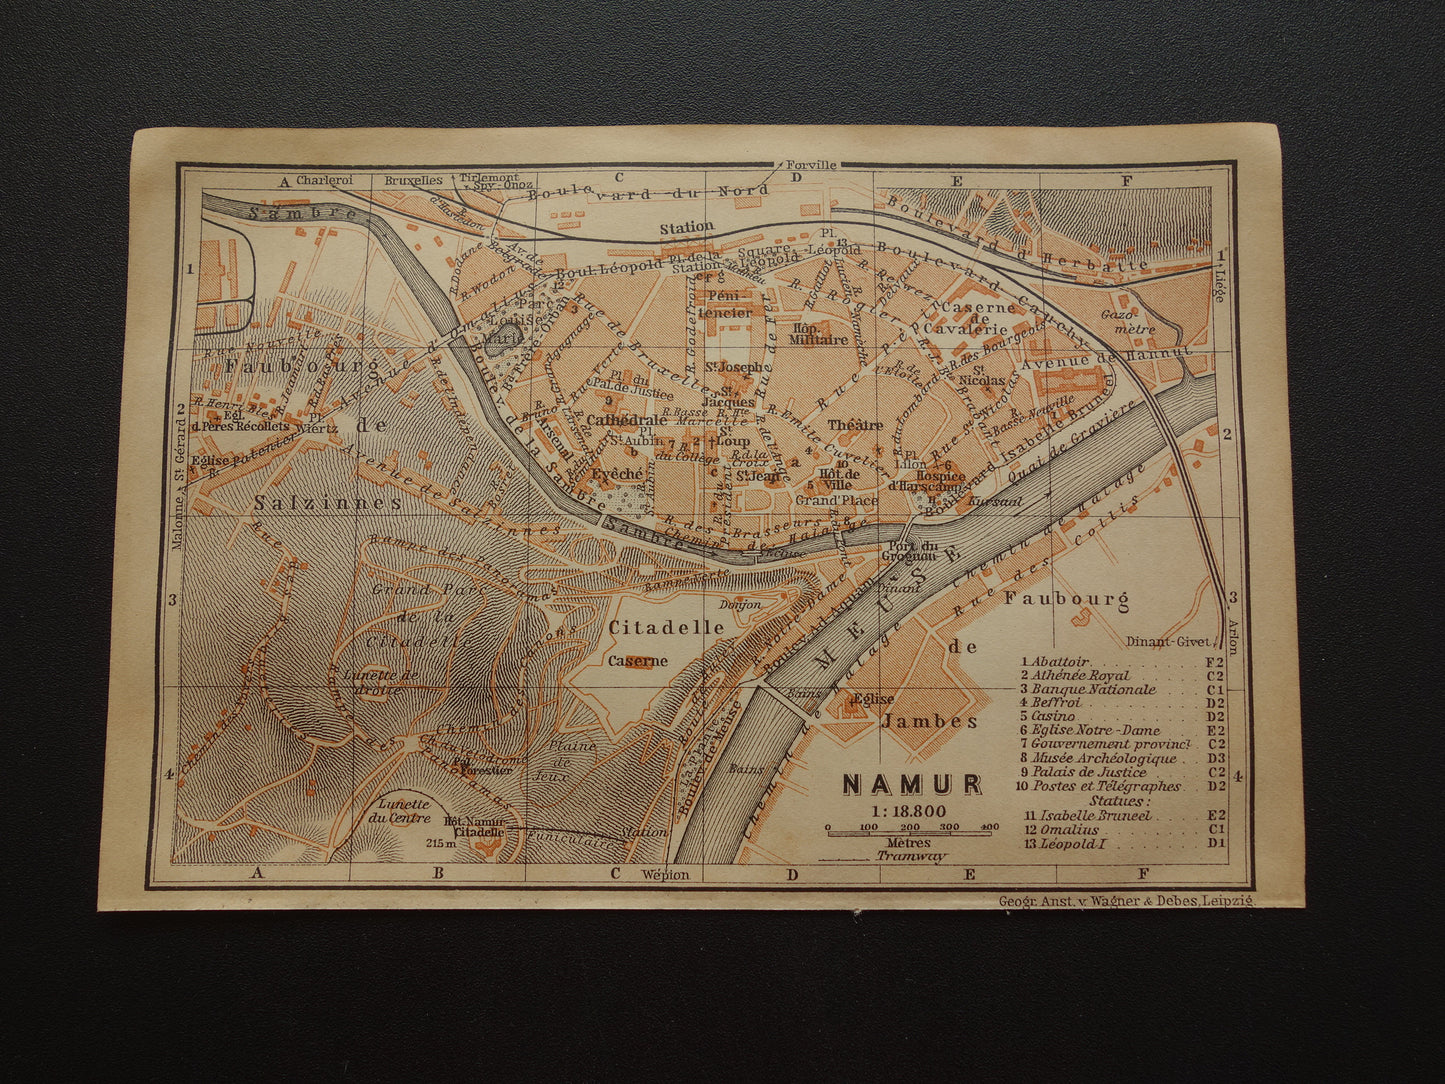 NAMEN oude kaart van Namur België uit 1904 kleine originele antieke plattegrond landkaart